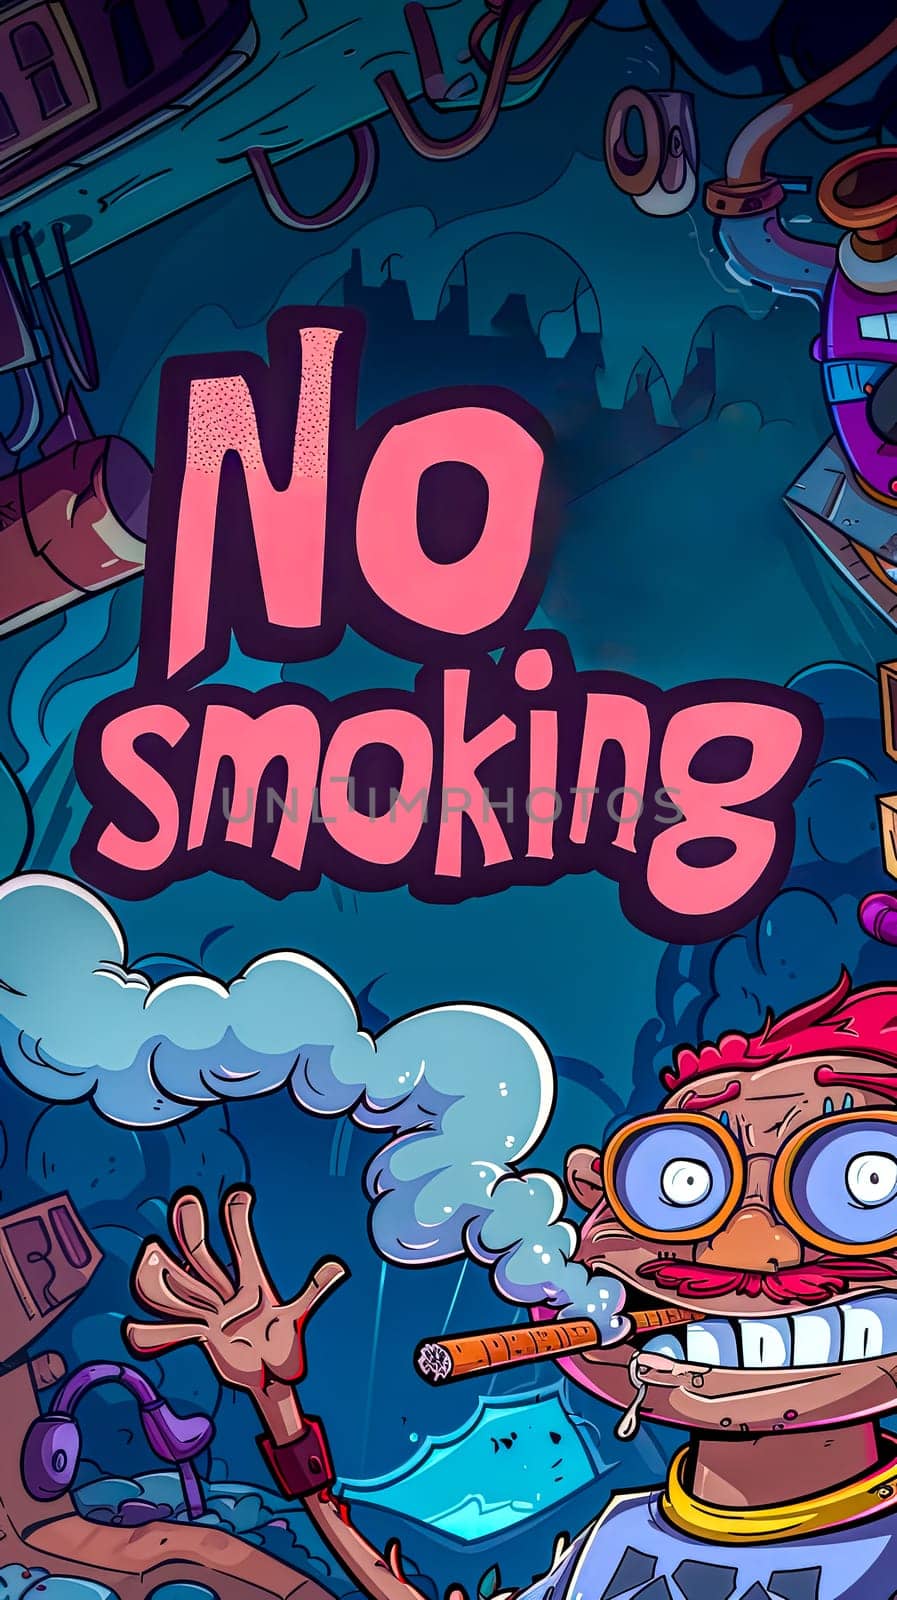 No smoking cartoon warning poster design by Edophoto